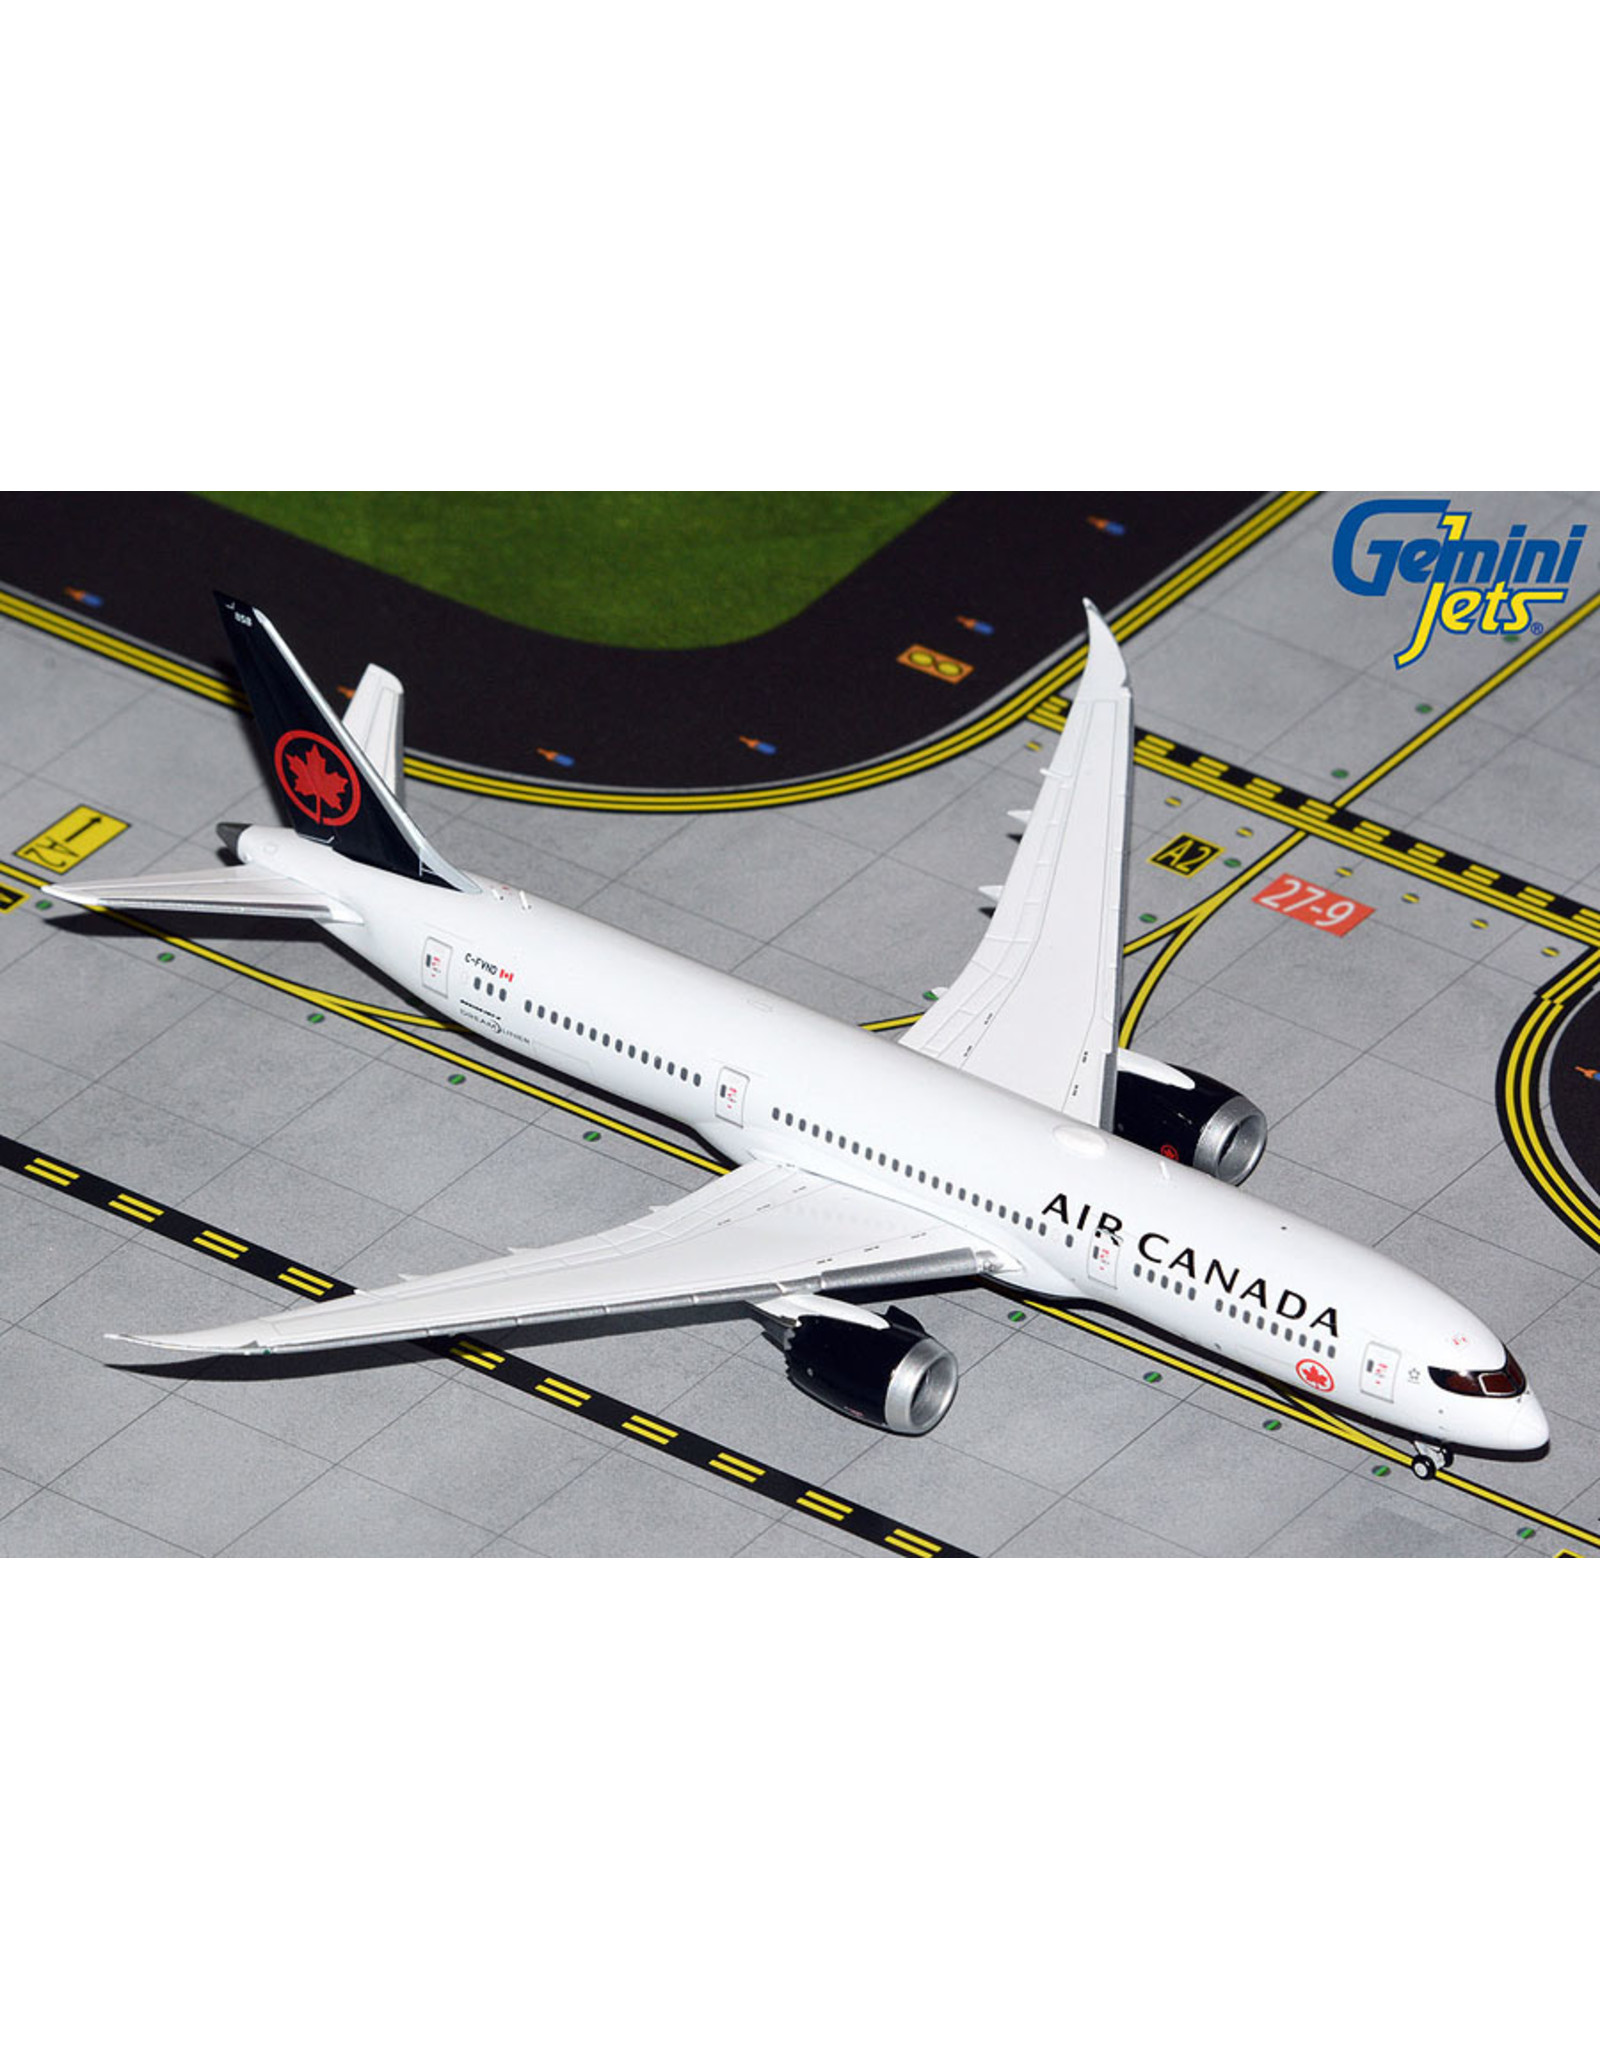 Gemini Gem4 Air Canada 787-9 new C-FVND